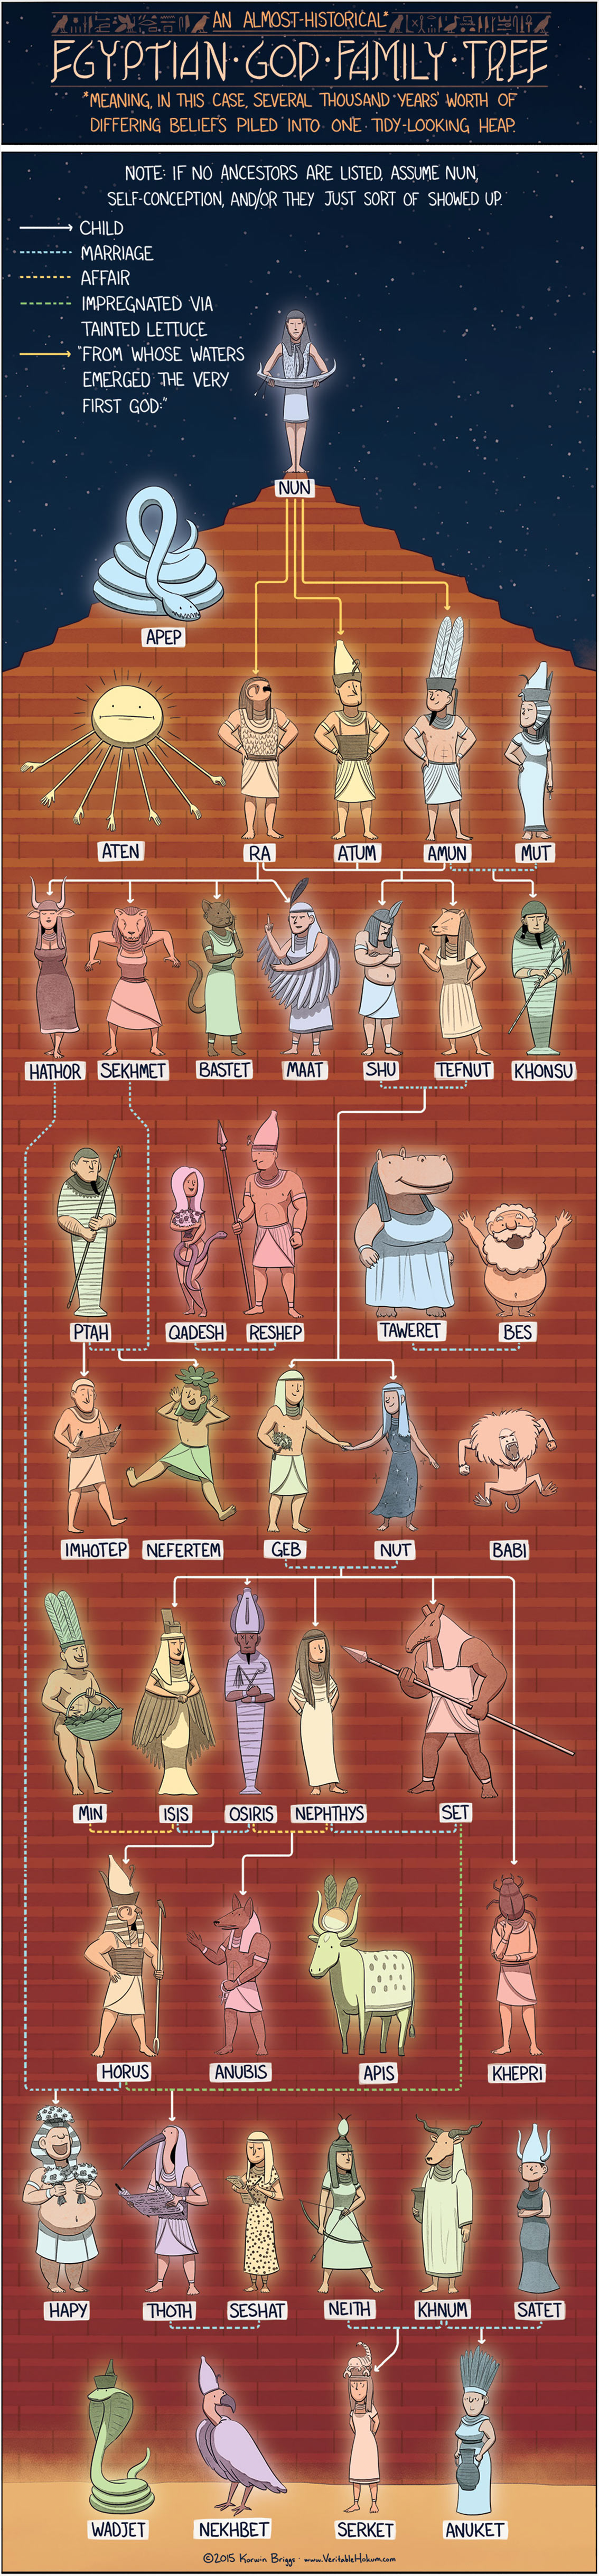 Family Tree of Egyptian Gods and Goddesses